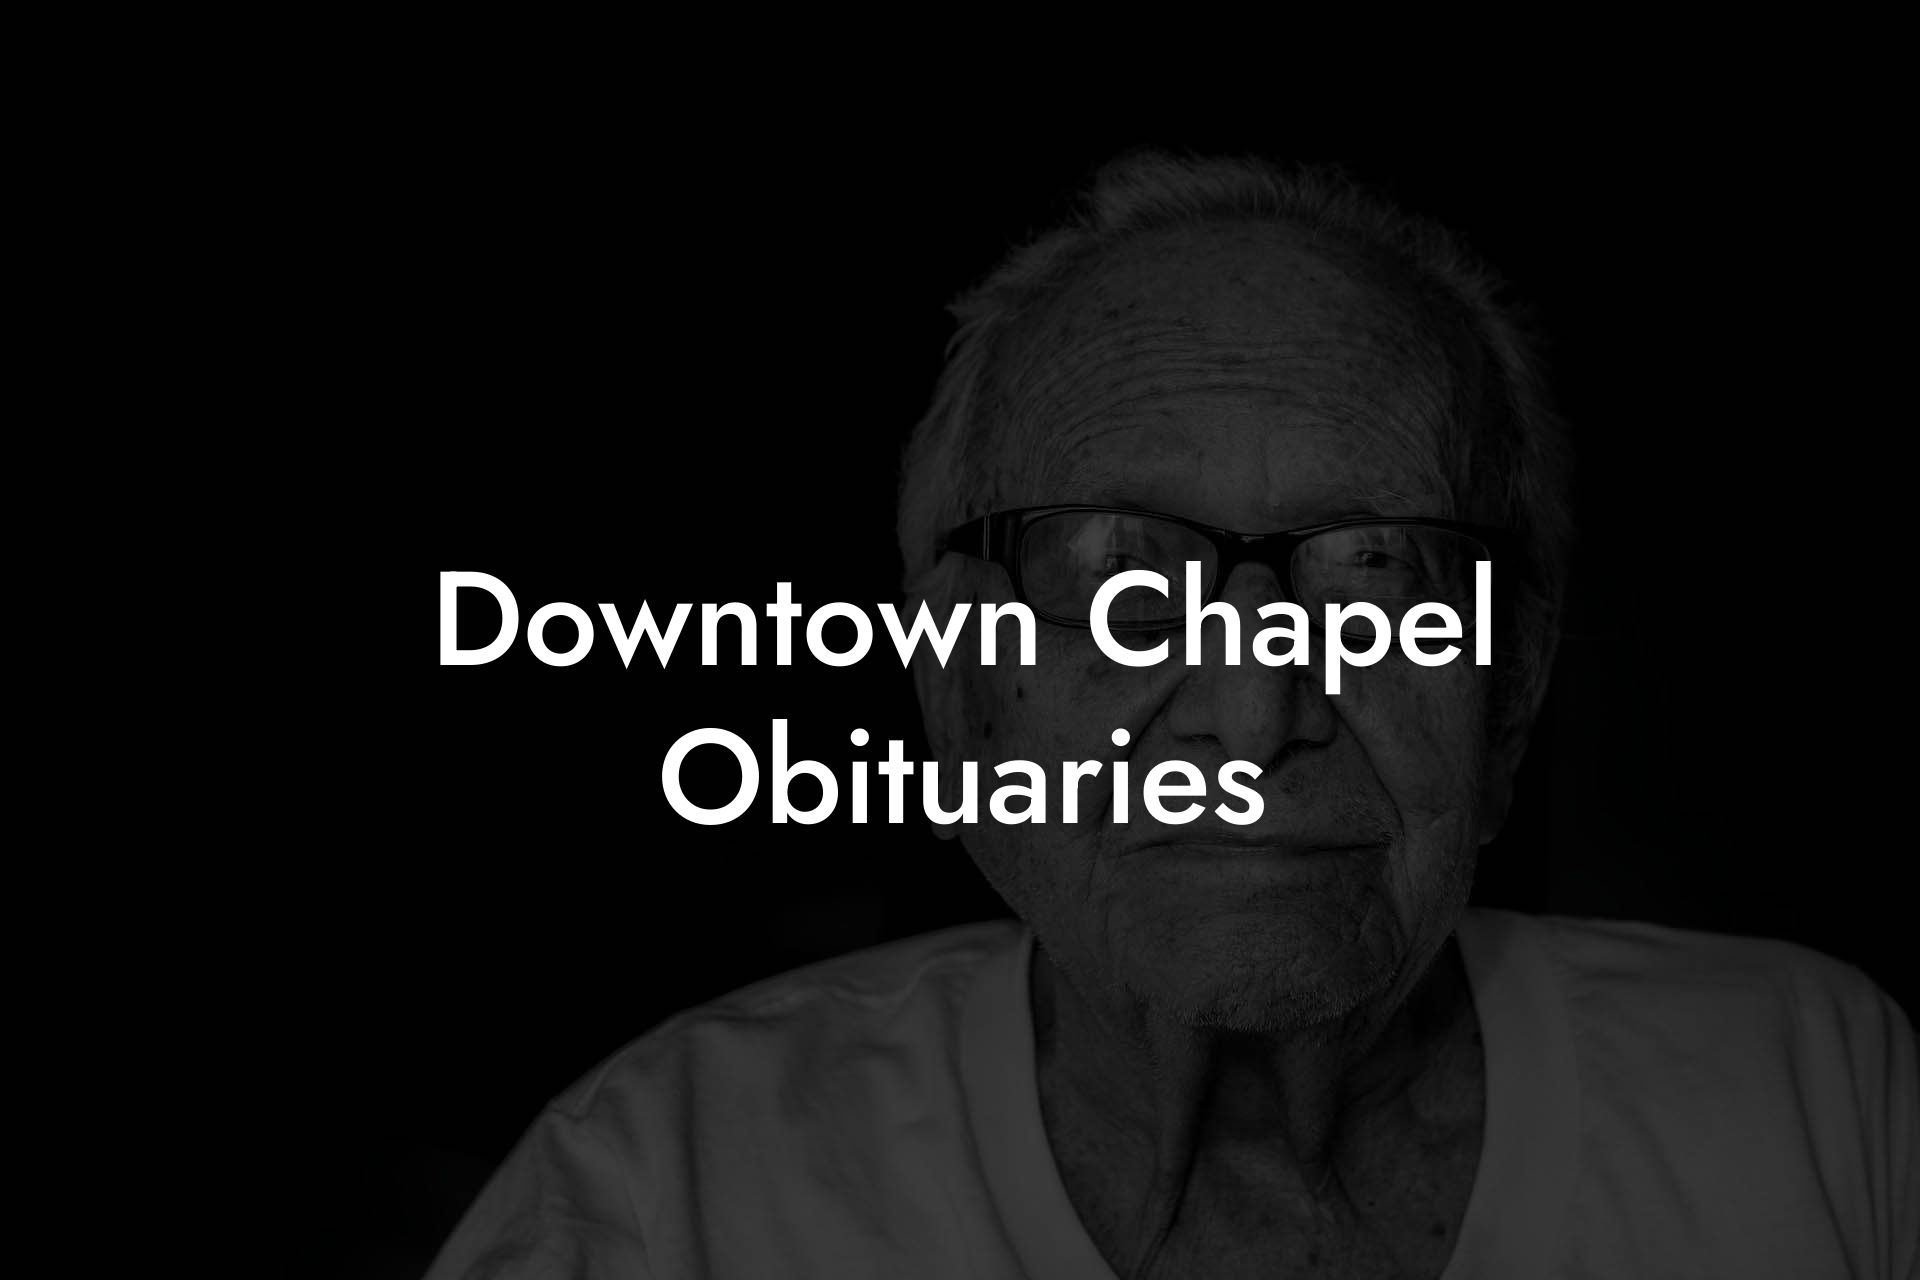 Downtown Chapel Obituaries